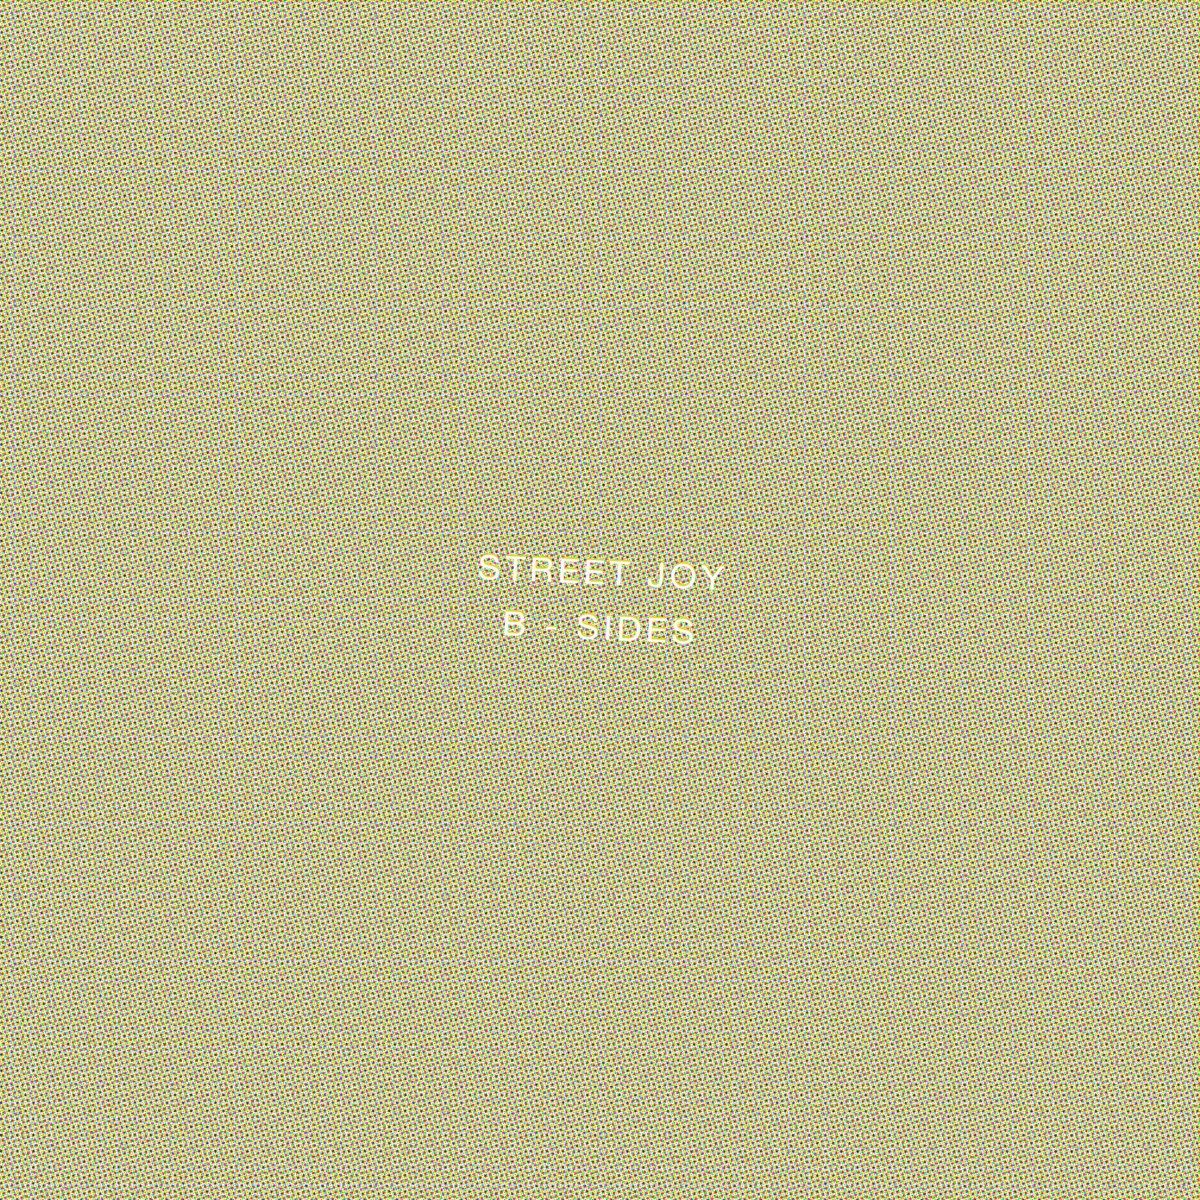 Street Joy: B-Sides by Street Joy on Apple Music